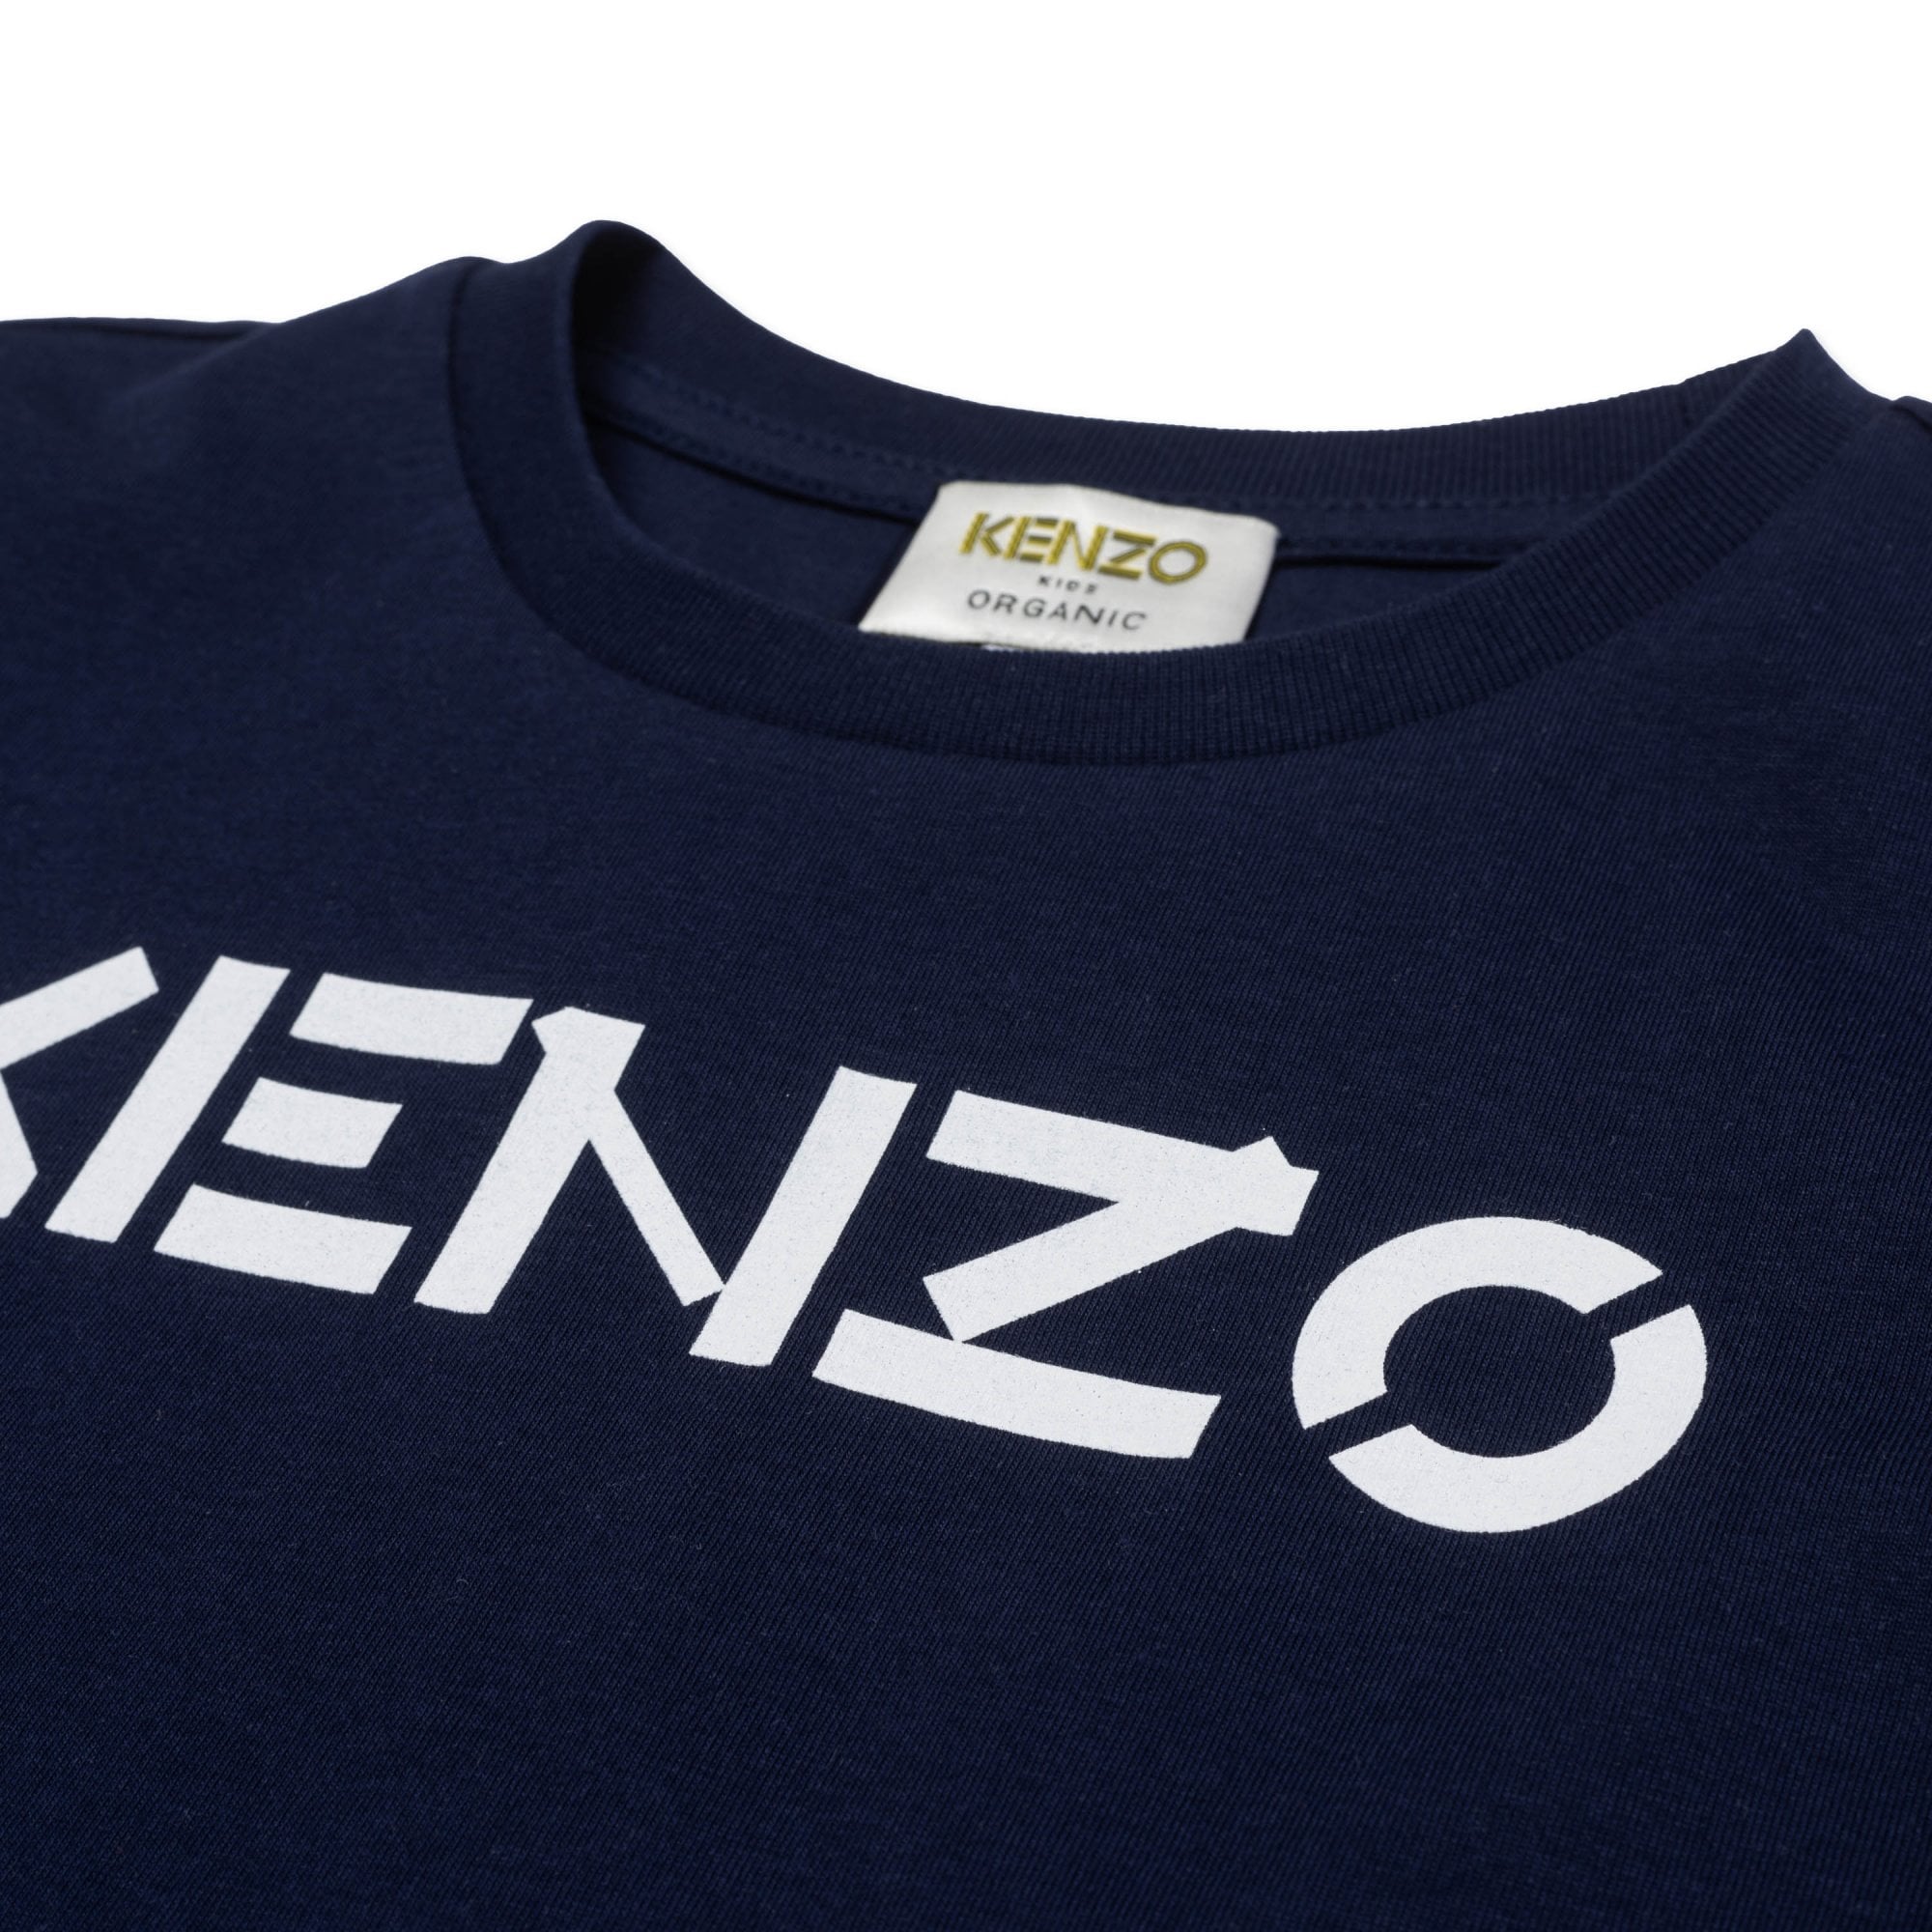 kenzo navy blue t shirt